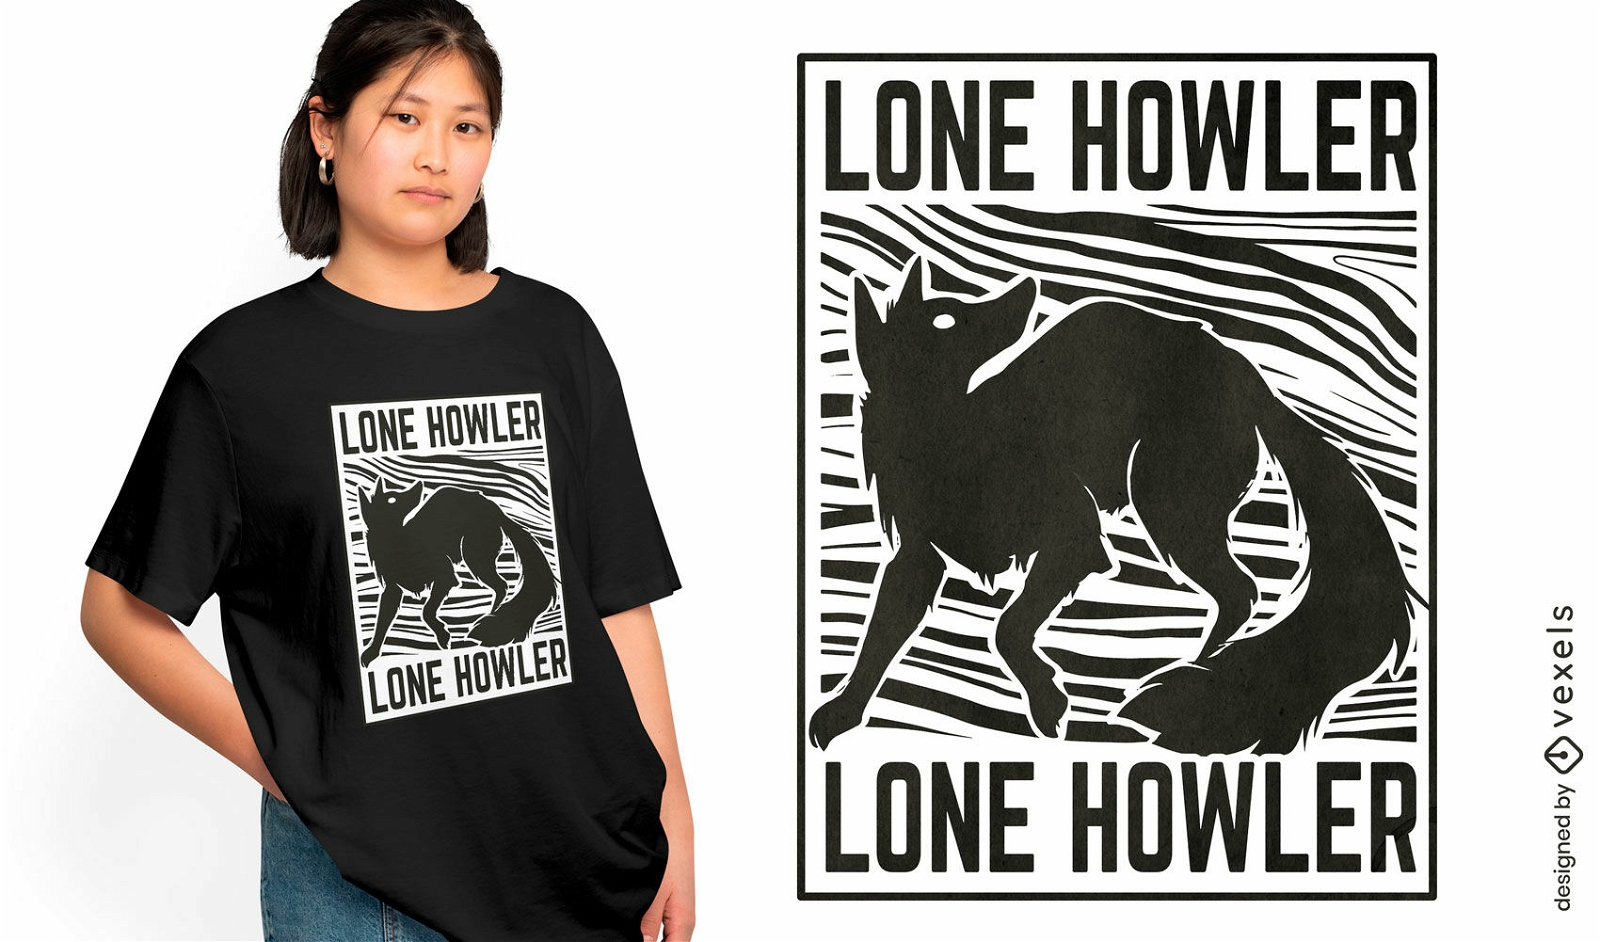 Lone howler t-shirt design